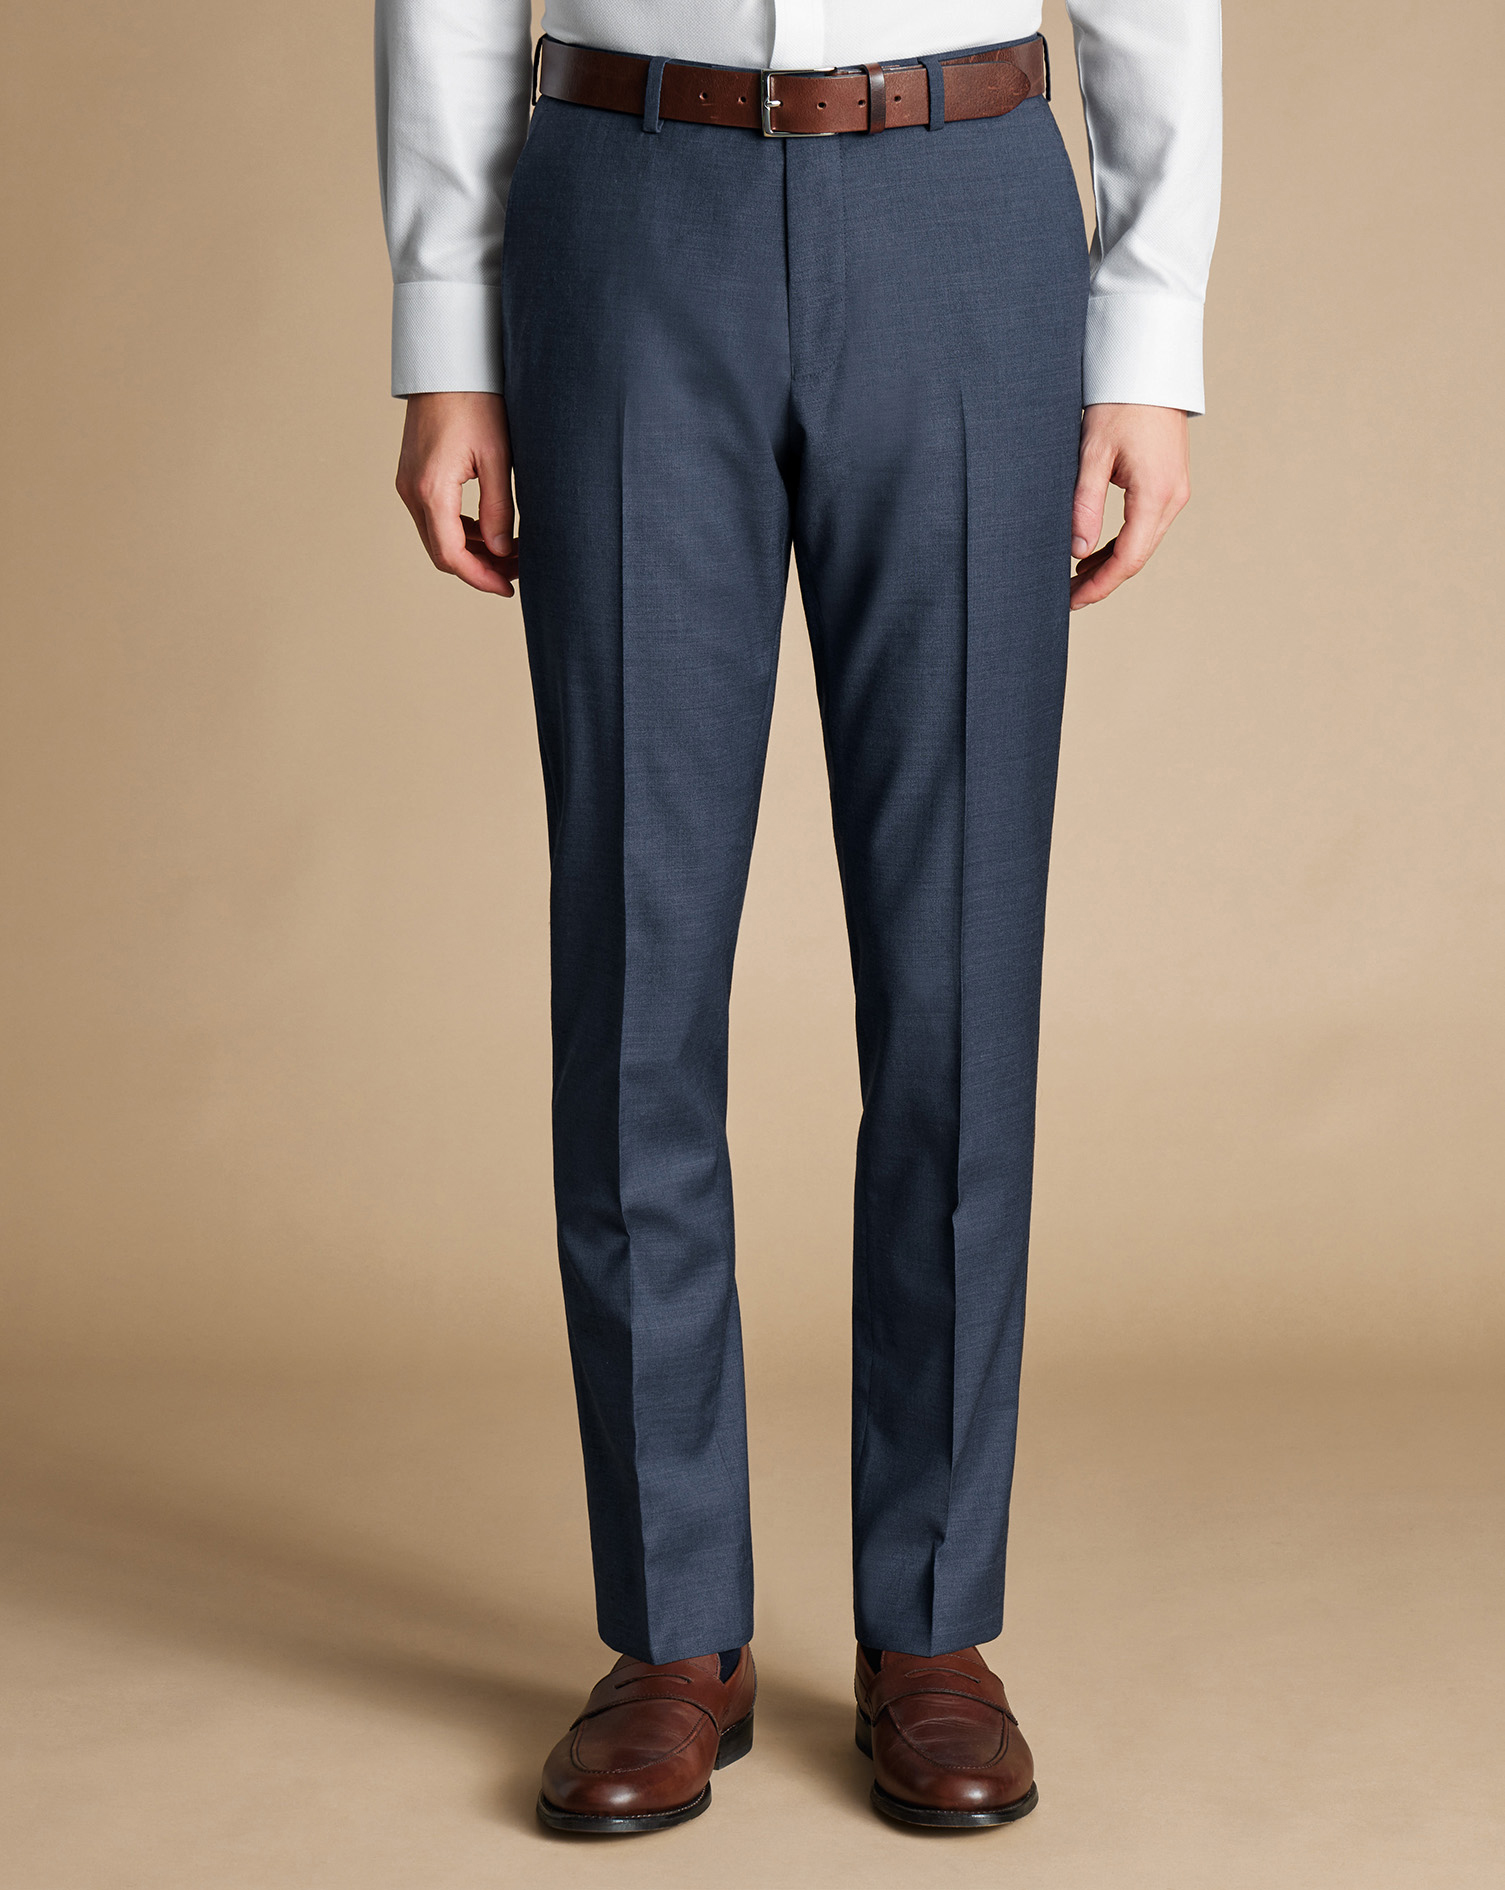 Men's Charles Tyrwhitt Italian Suit Trousers - Heather Blue Size 32/38
